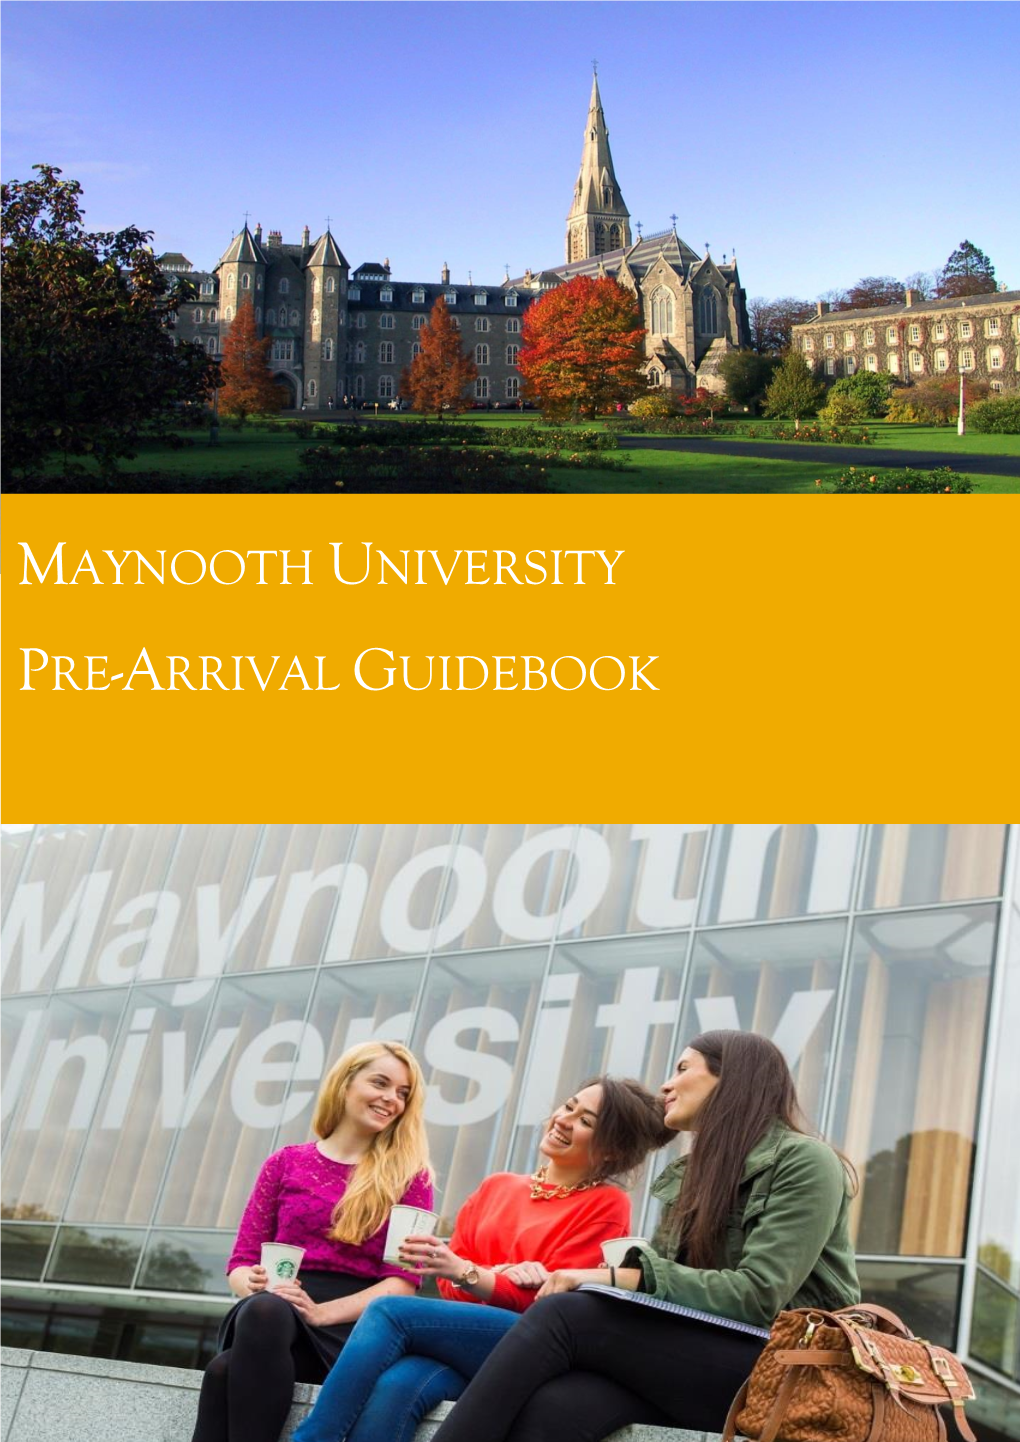 Maynooth University Pre-Arrival Guidebook